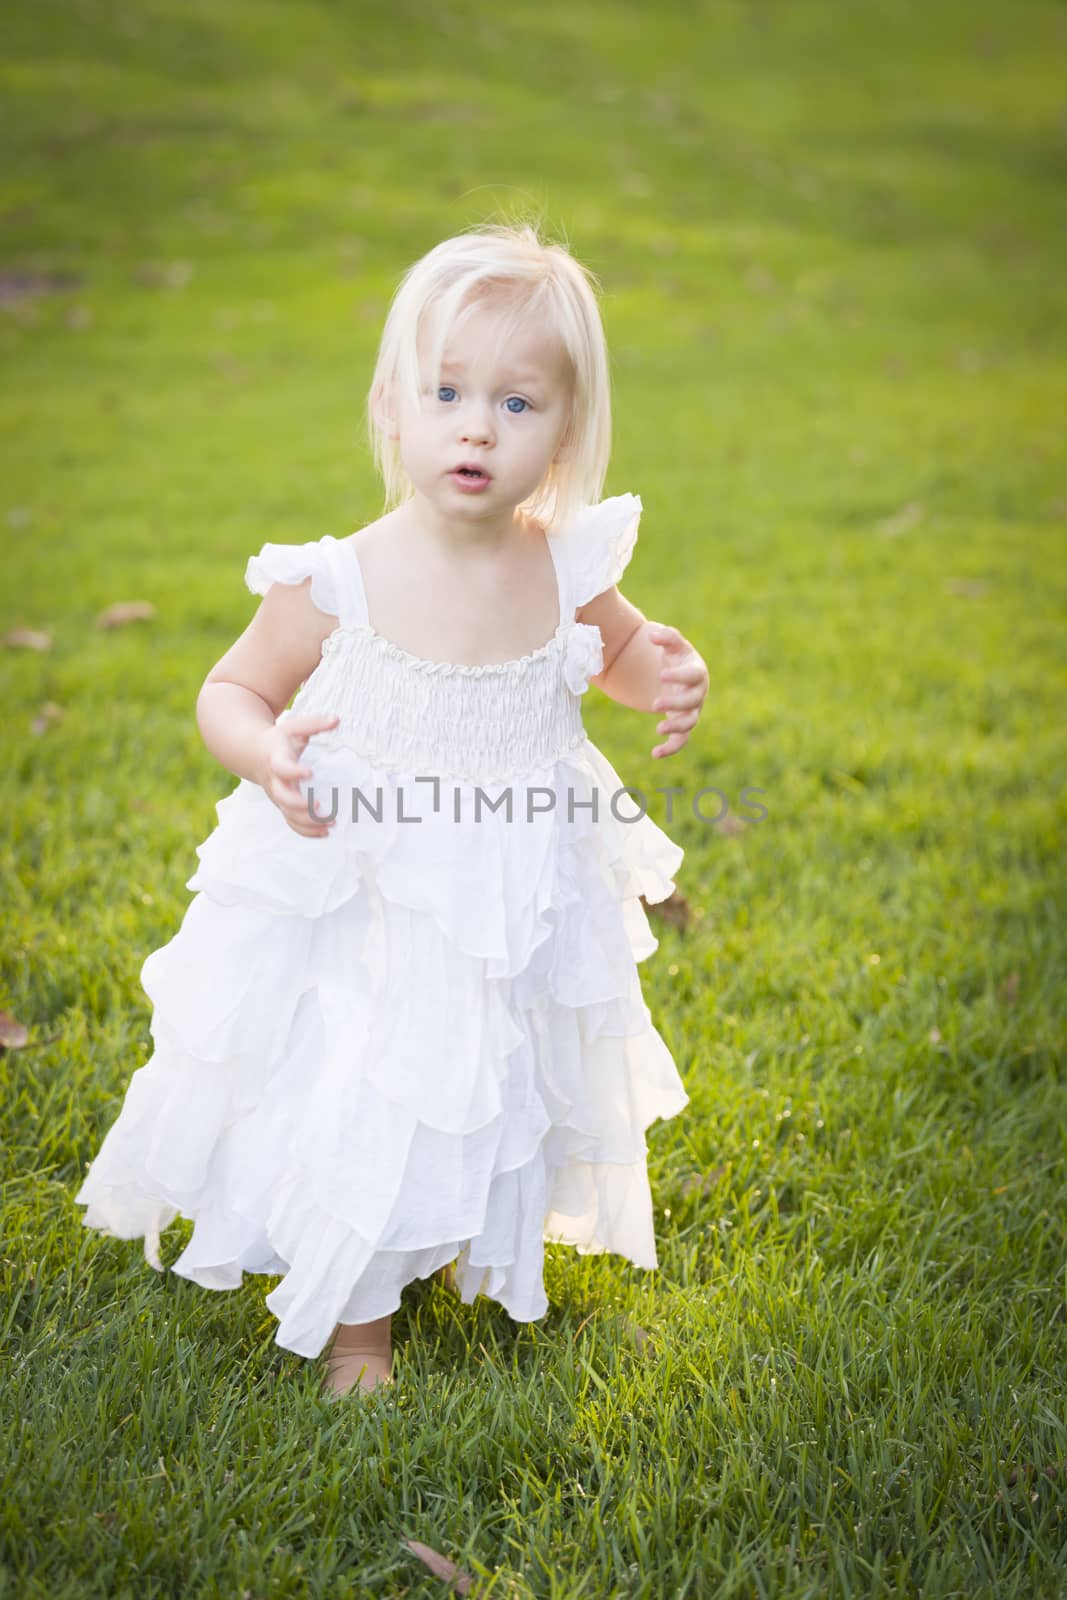 Beautiful Adorable Little Girl Wearing White Dress In A Grass Field.